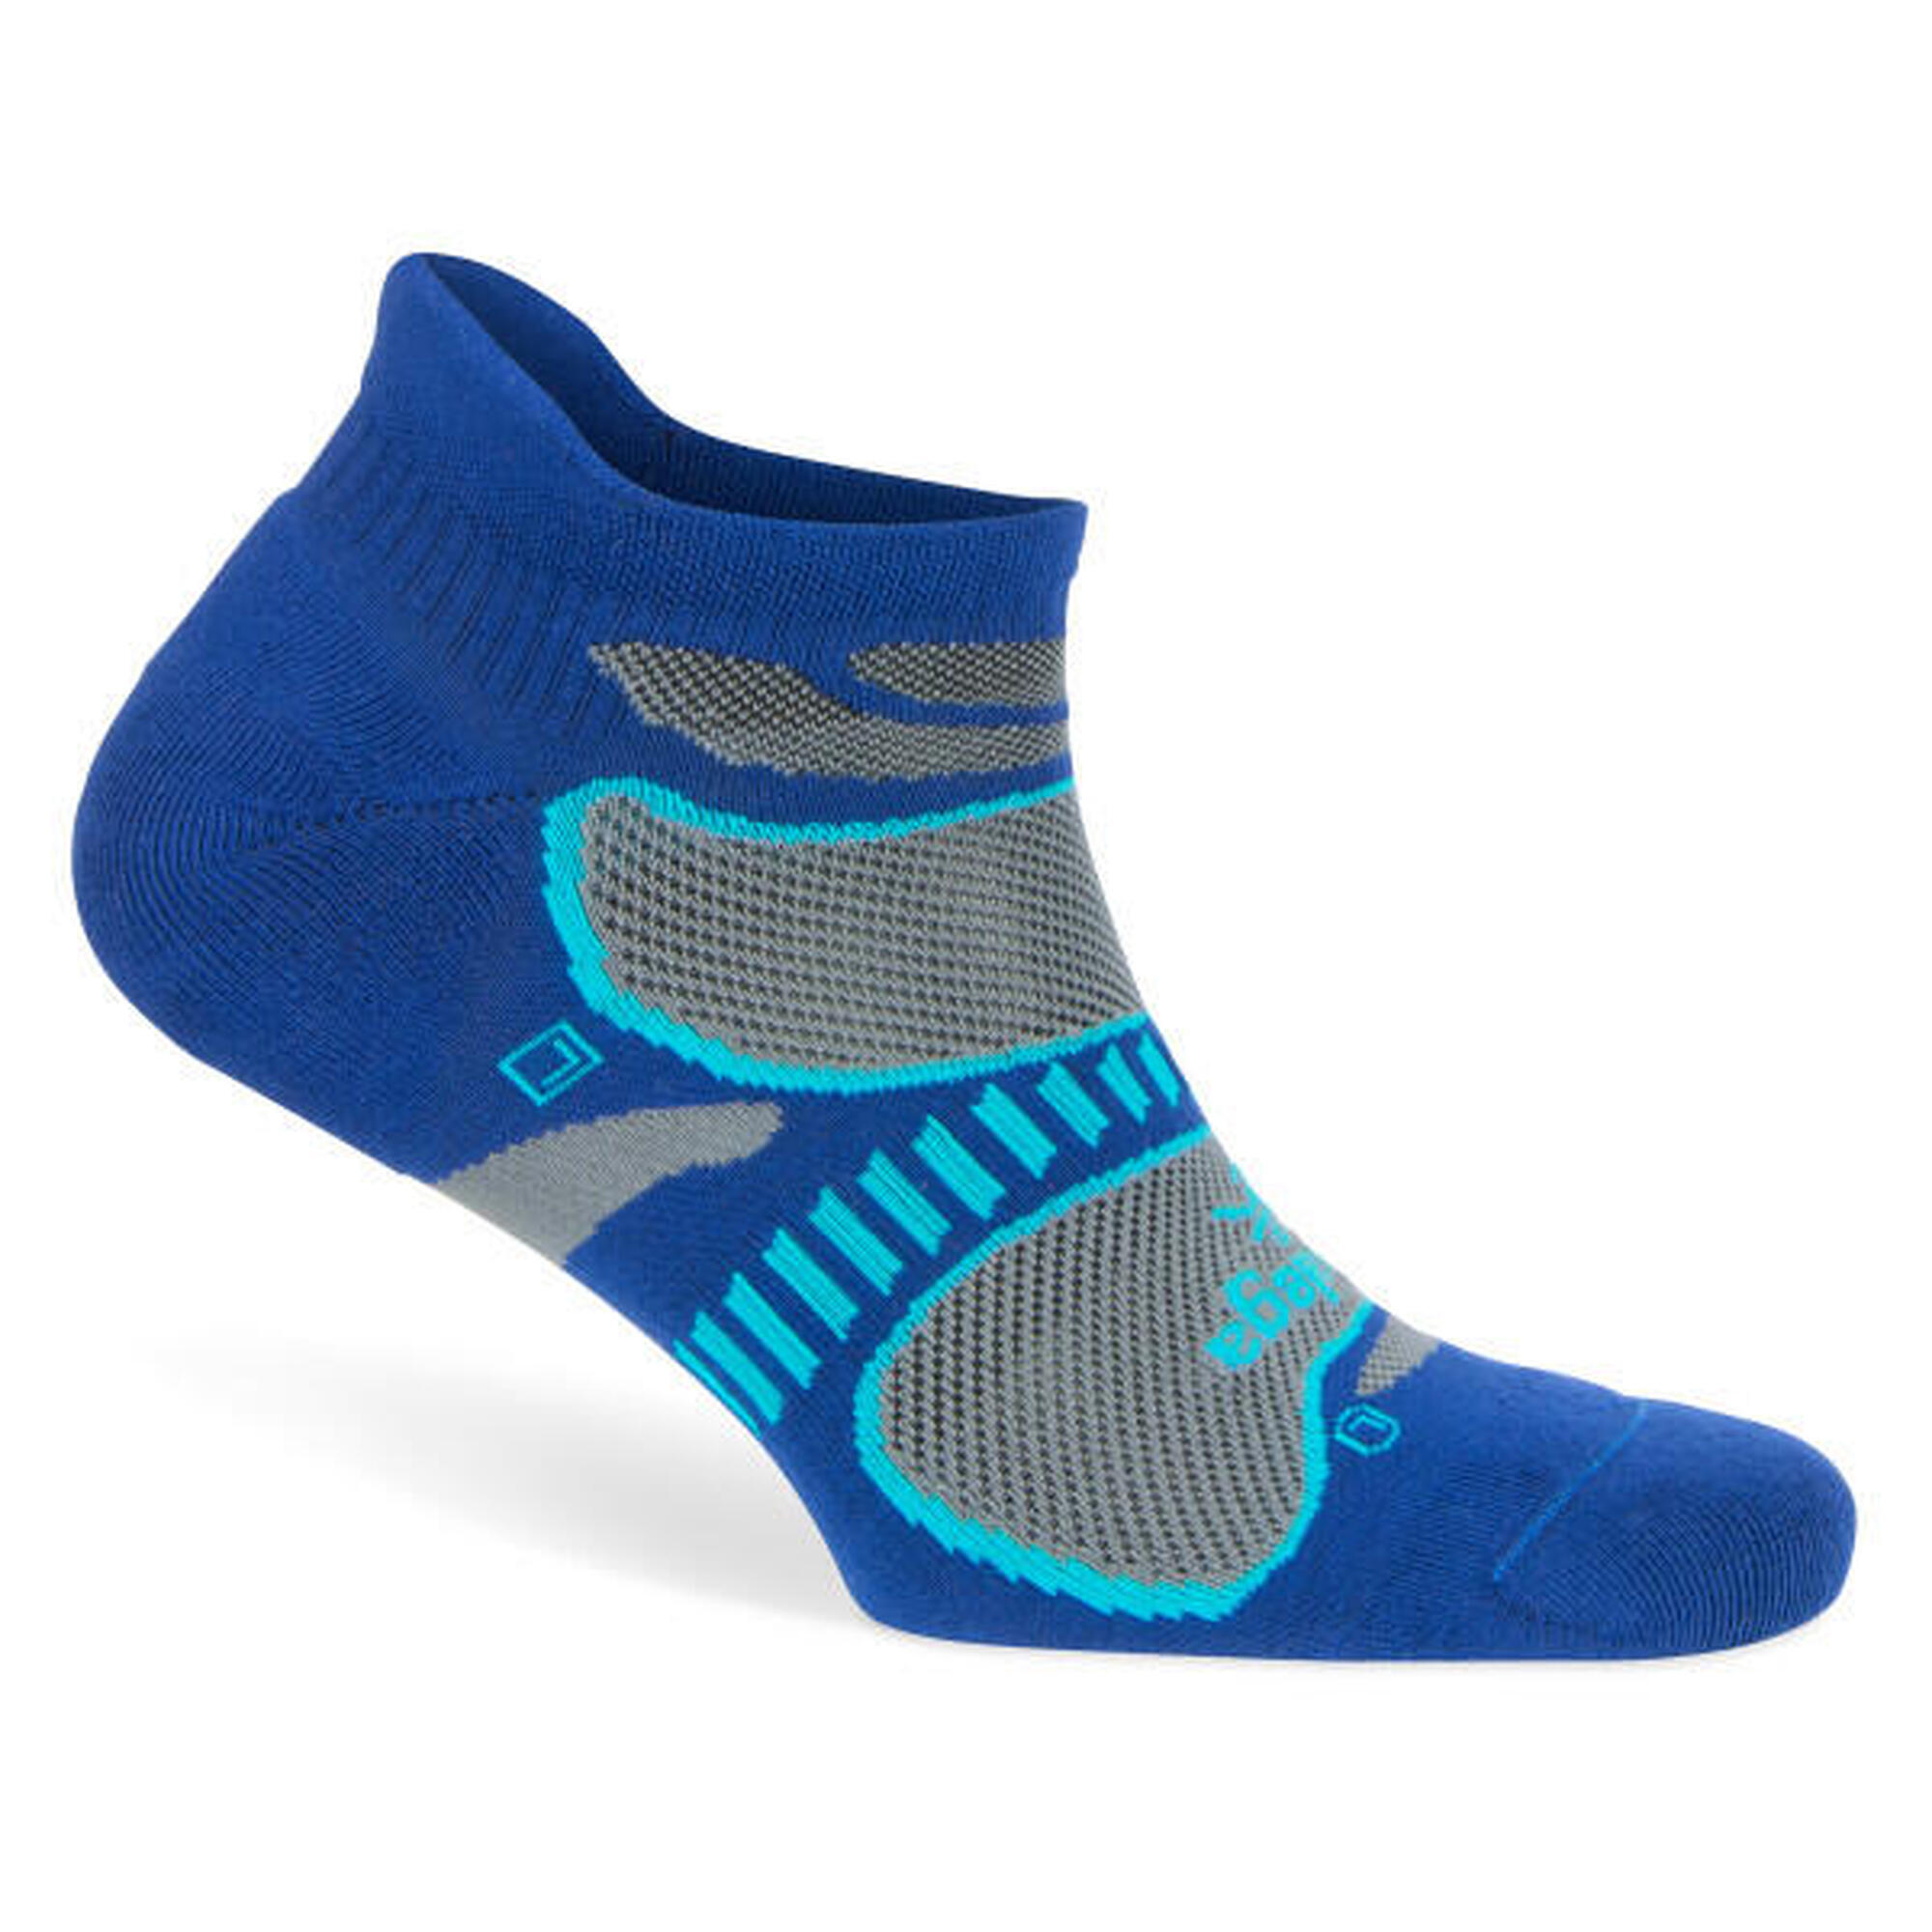 Balega running calcetines: Ligereza, control de la humedad y confort Talla L